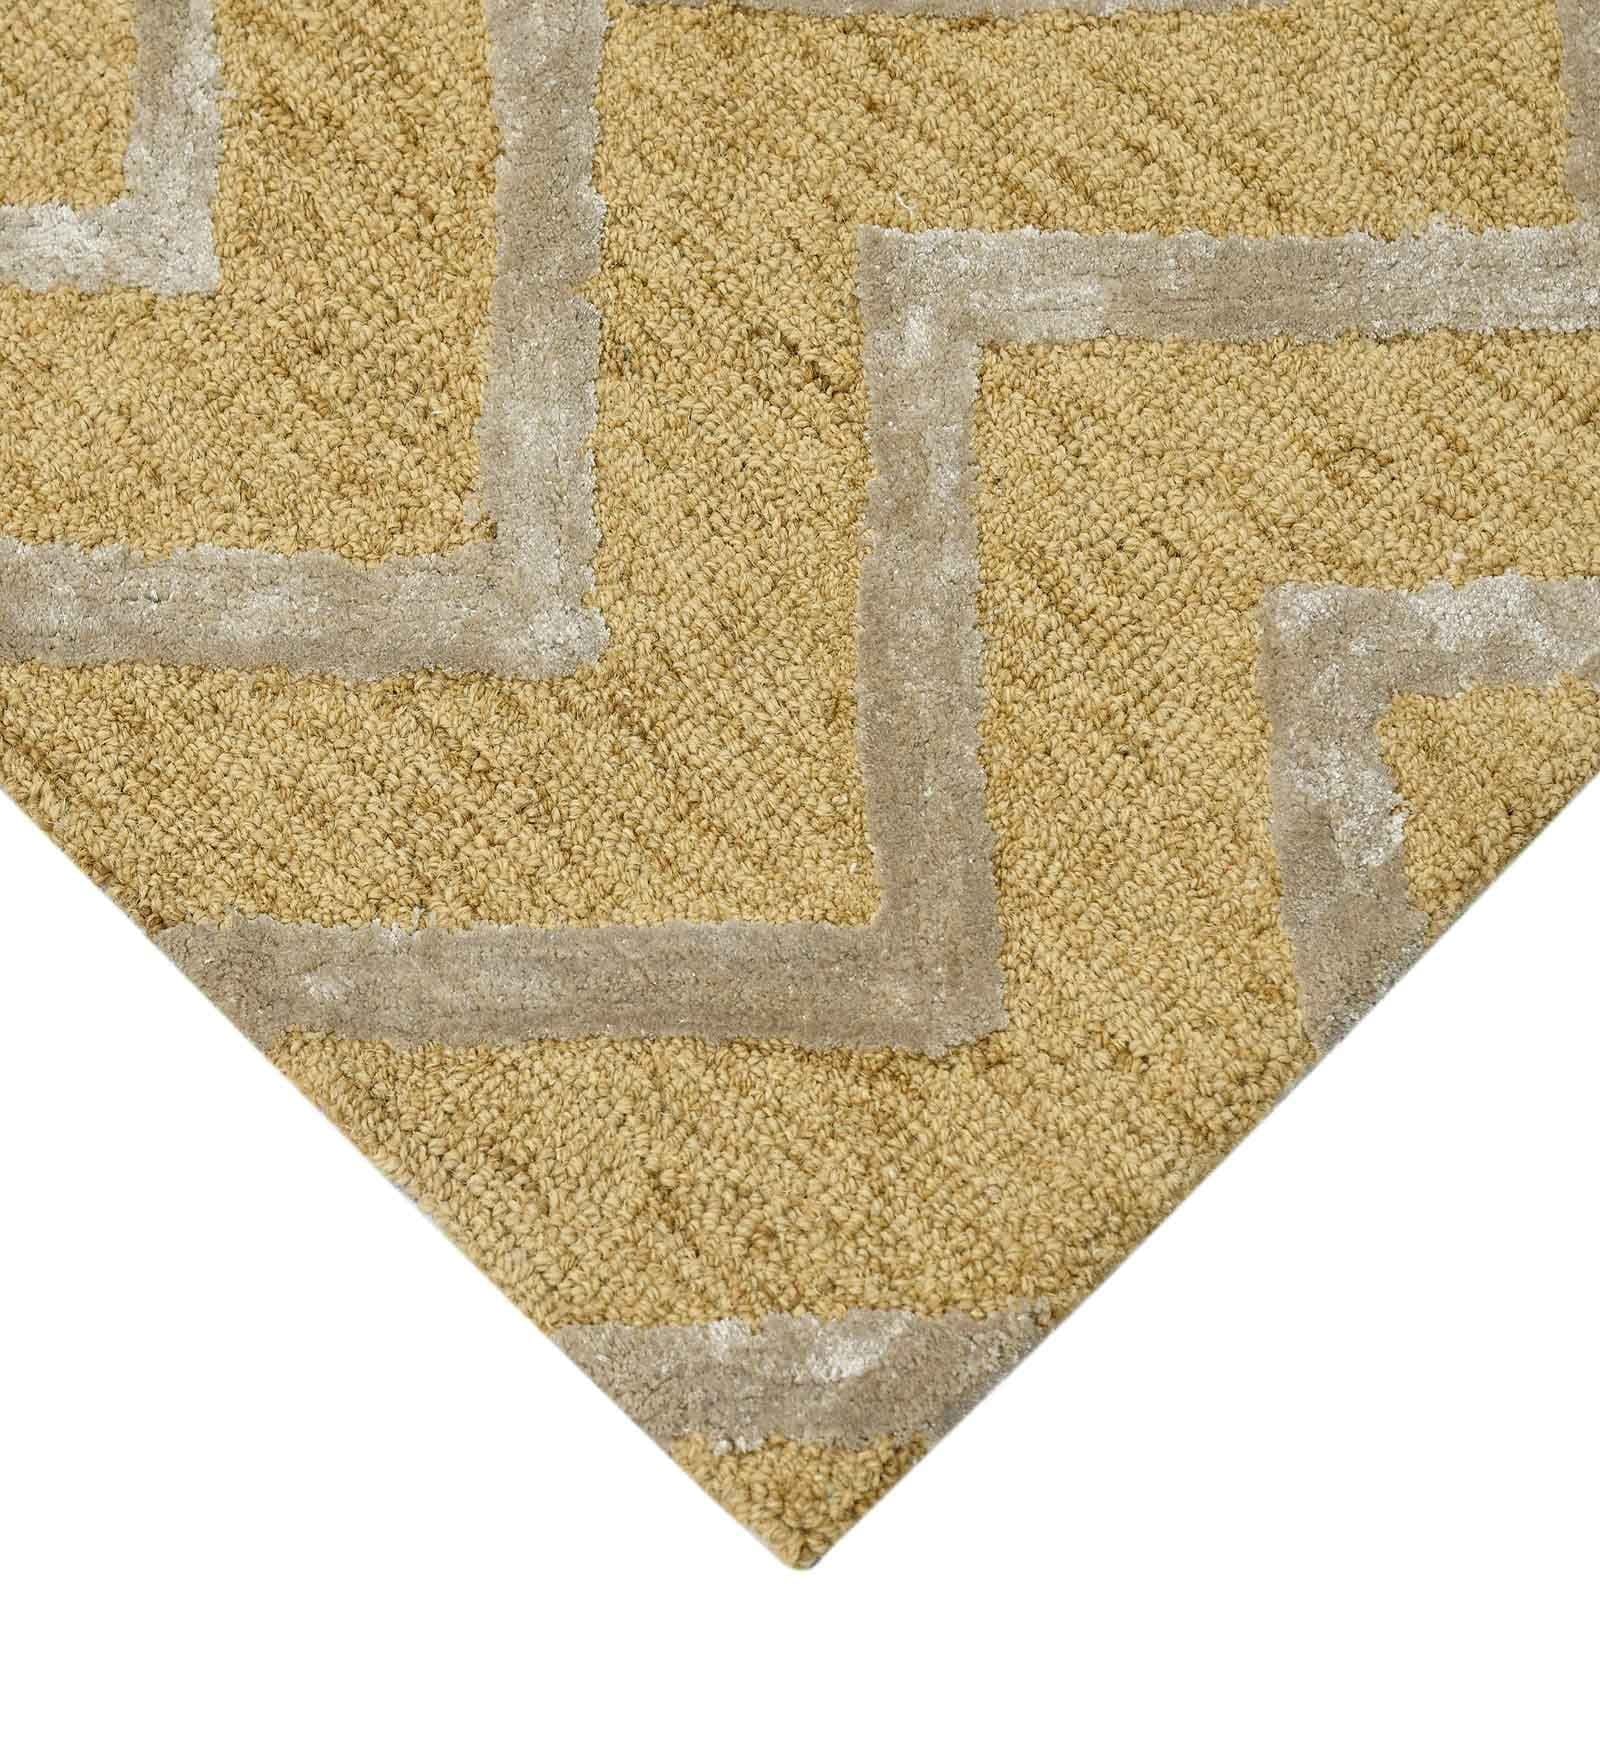 GOLD Wool & Viscose Canyan 8x10 Feet  Hand-Tufted Carpet - Rug